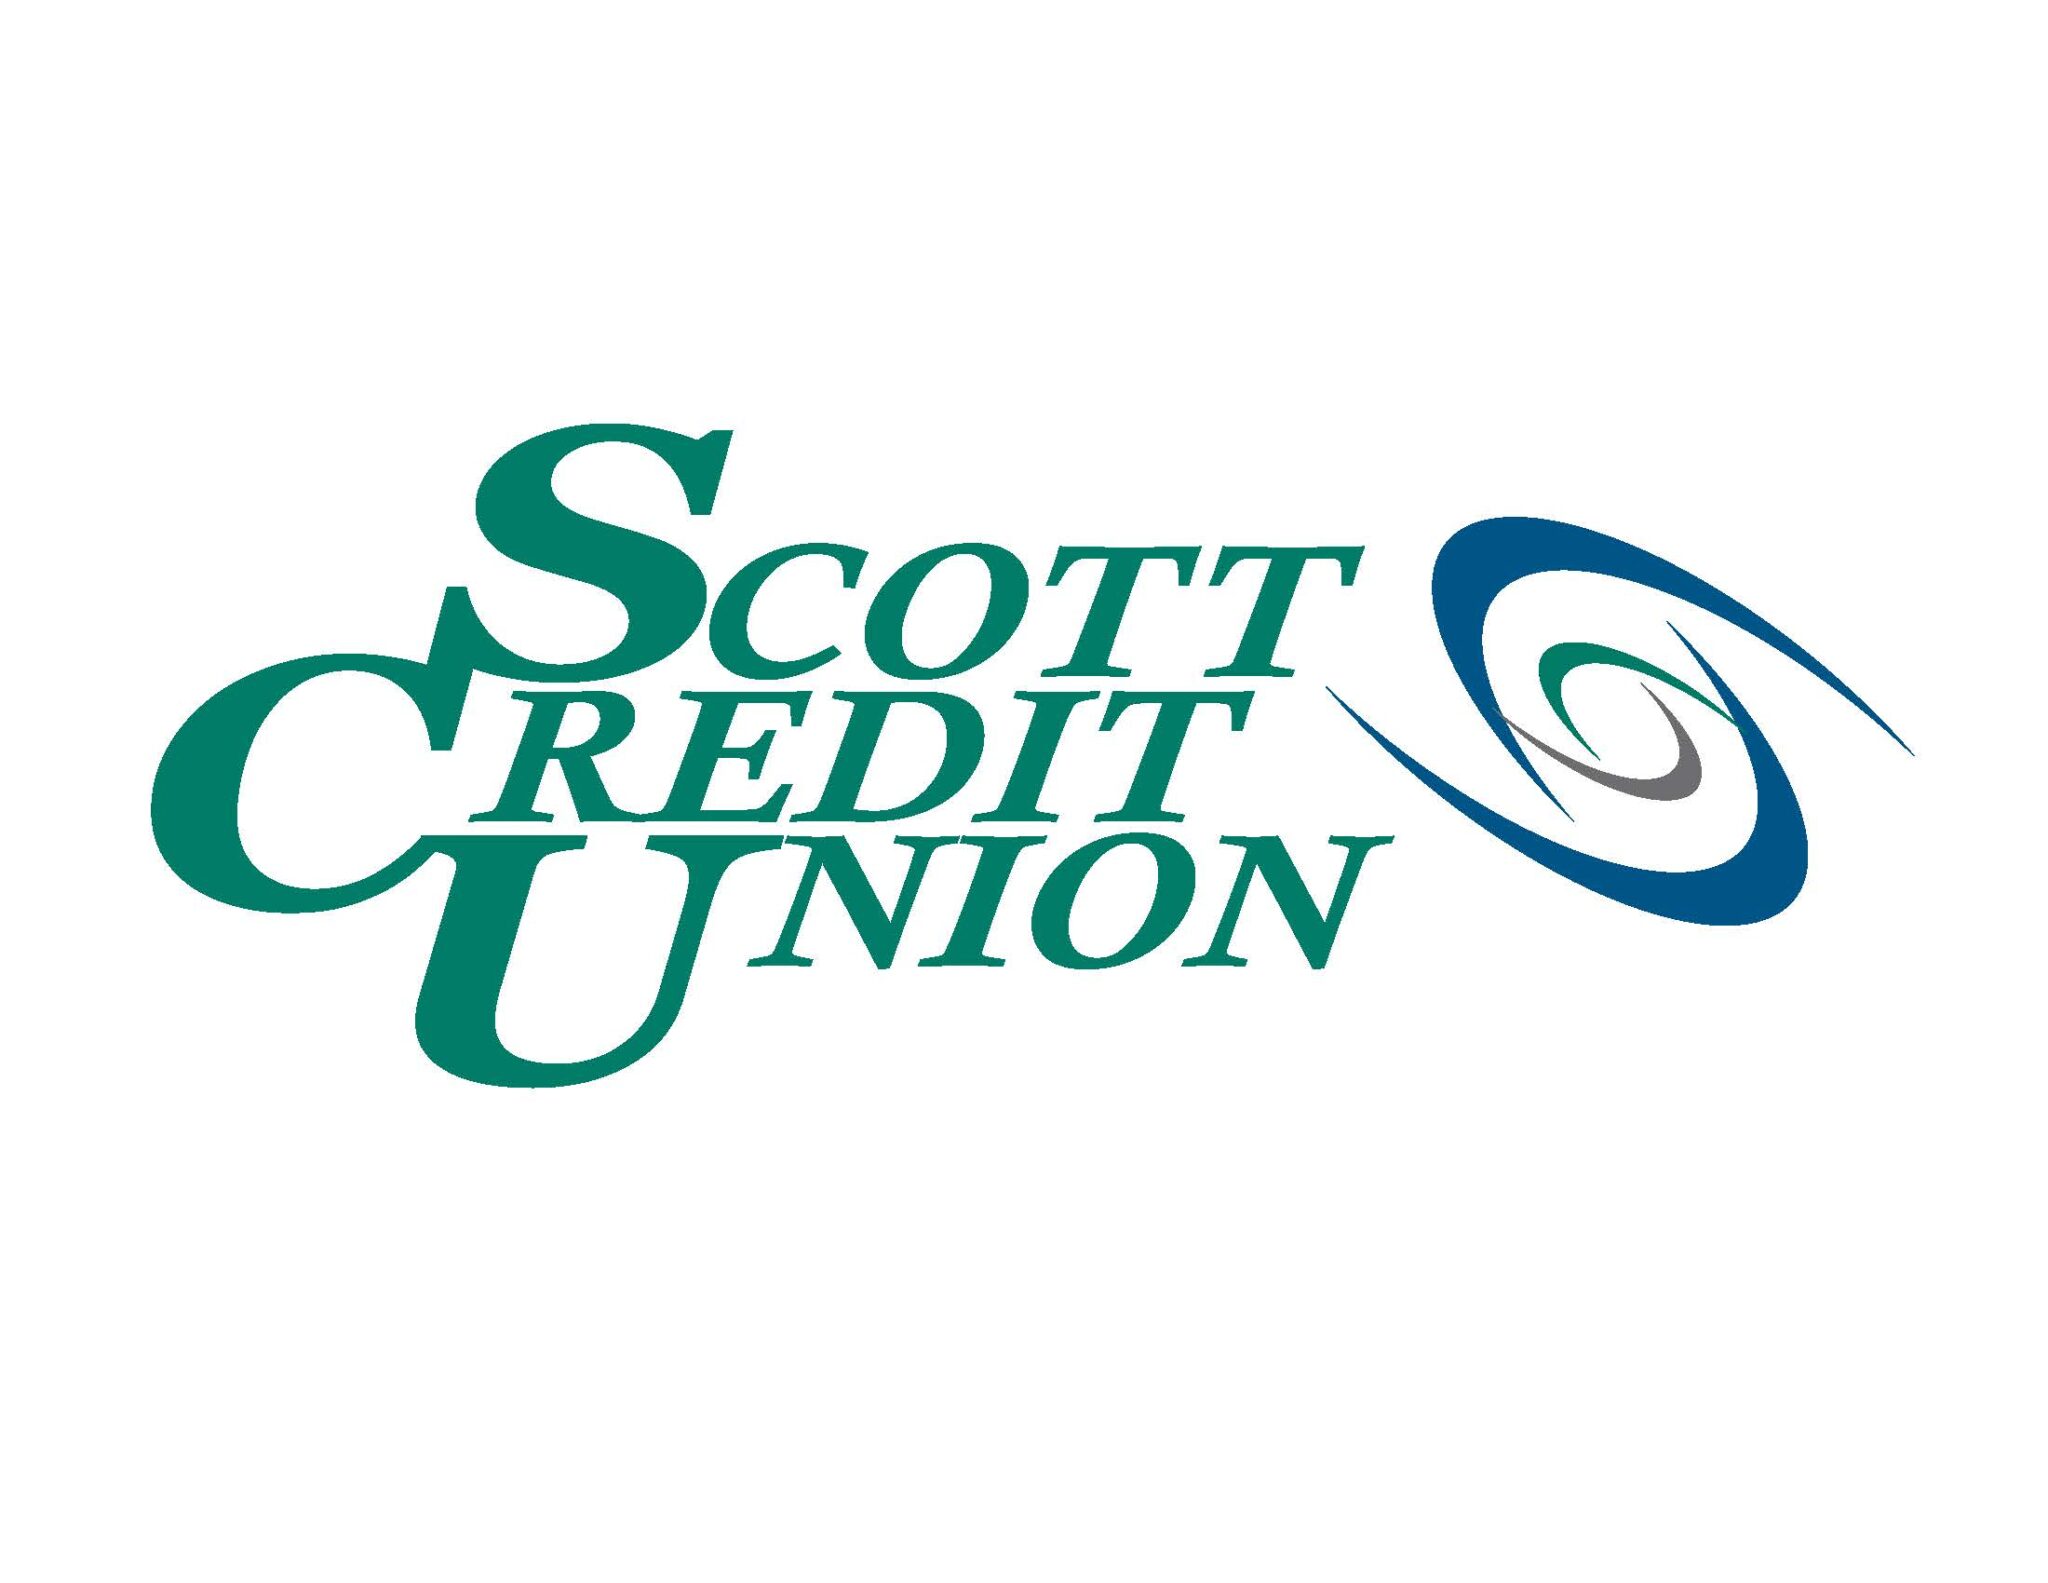 ScottCreditUnion2012